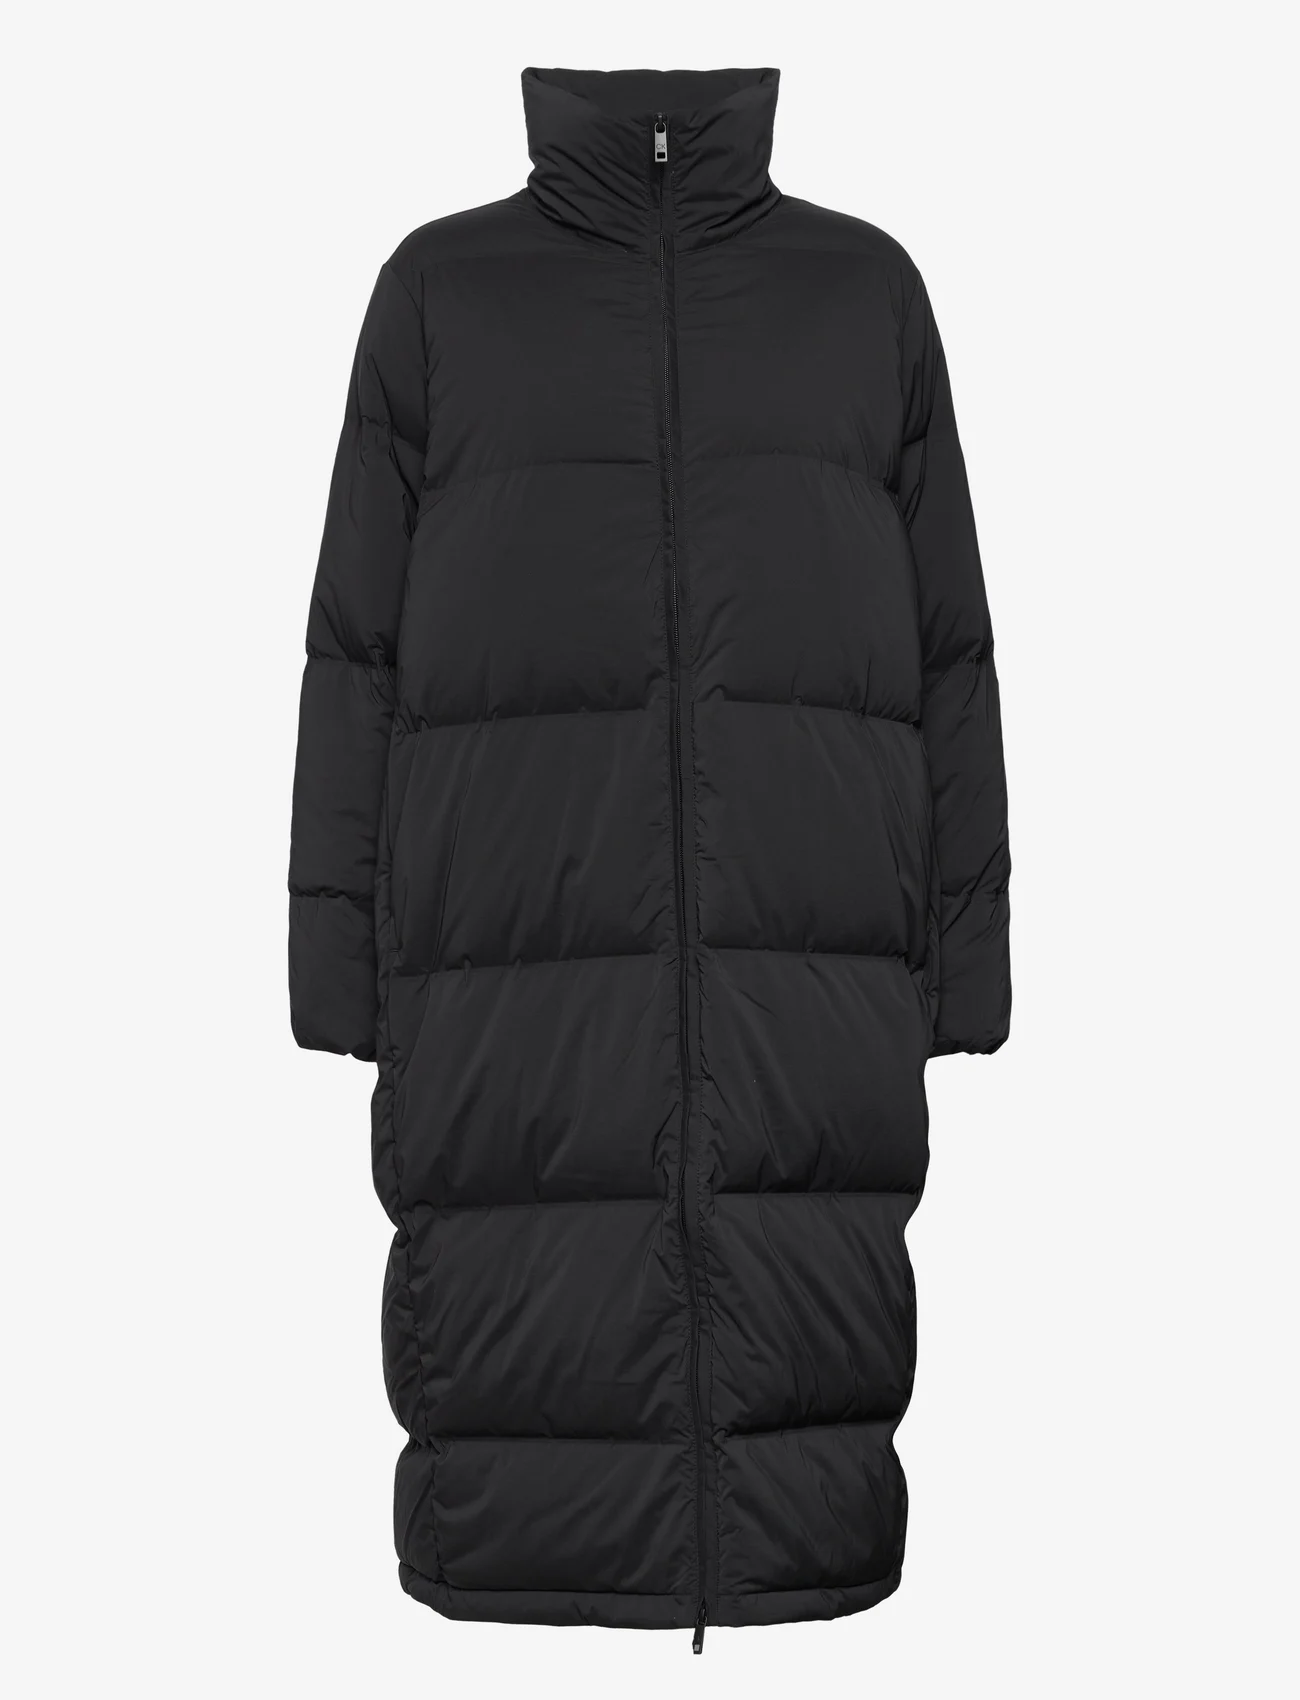 Calvin Klein - SEAMLESS LOFTY MAXI COAT - winter jackets - ck black - 0